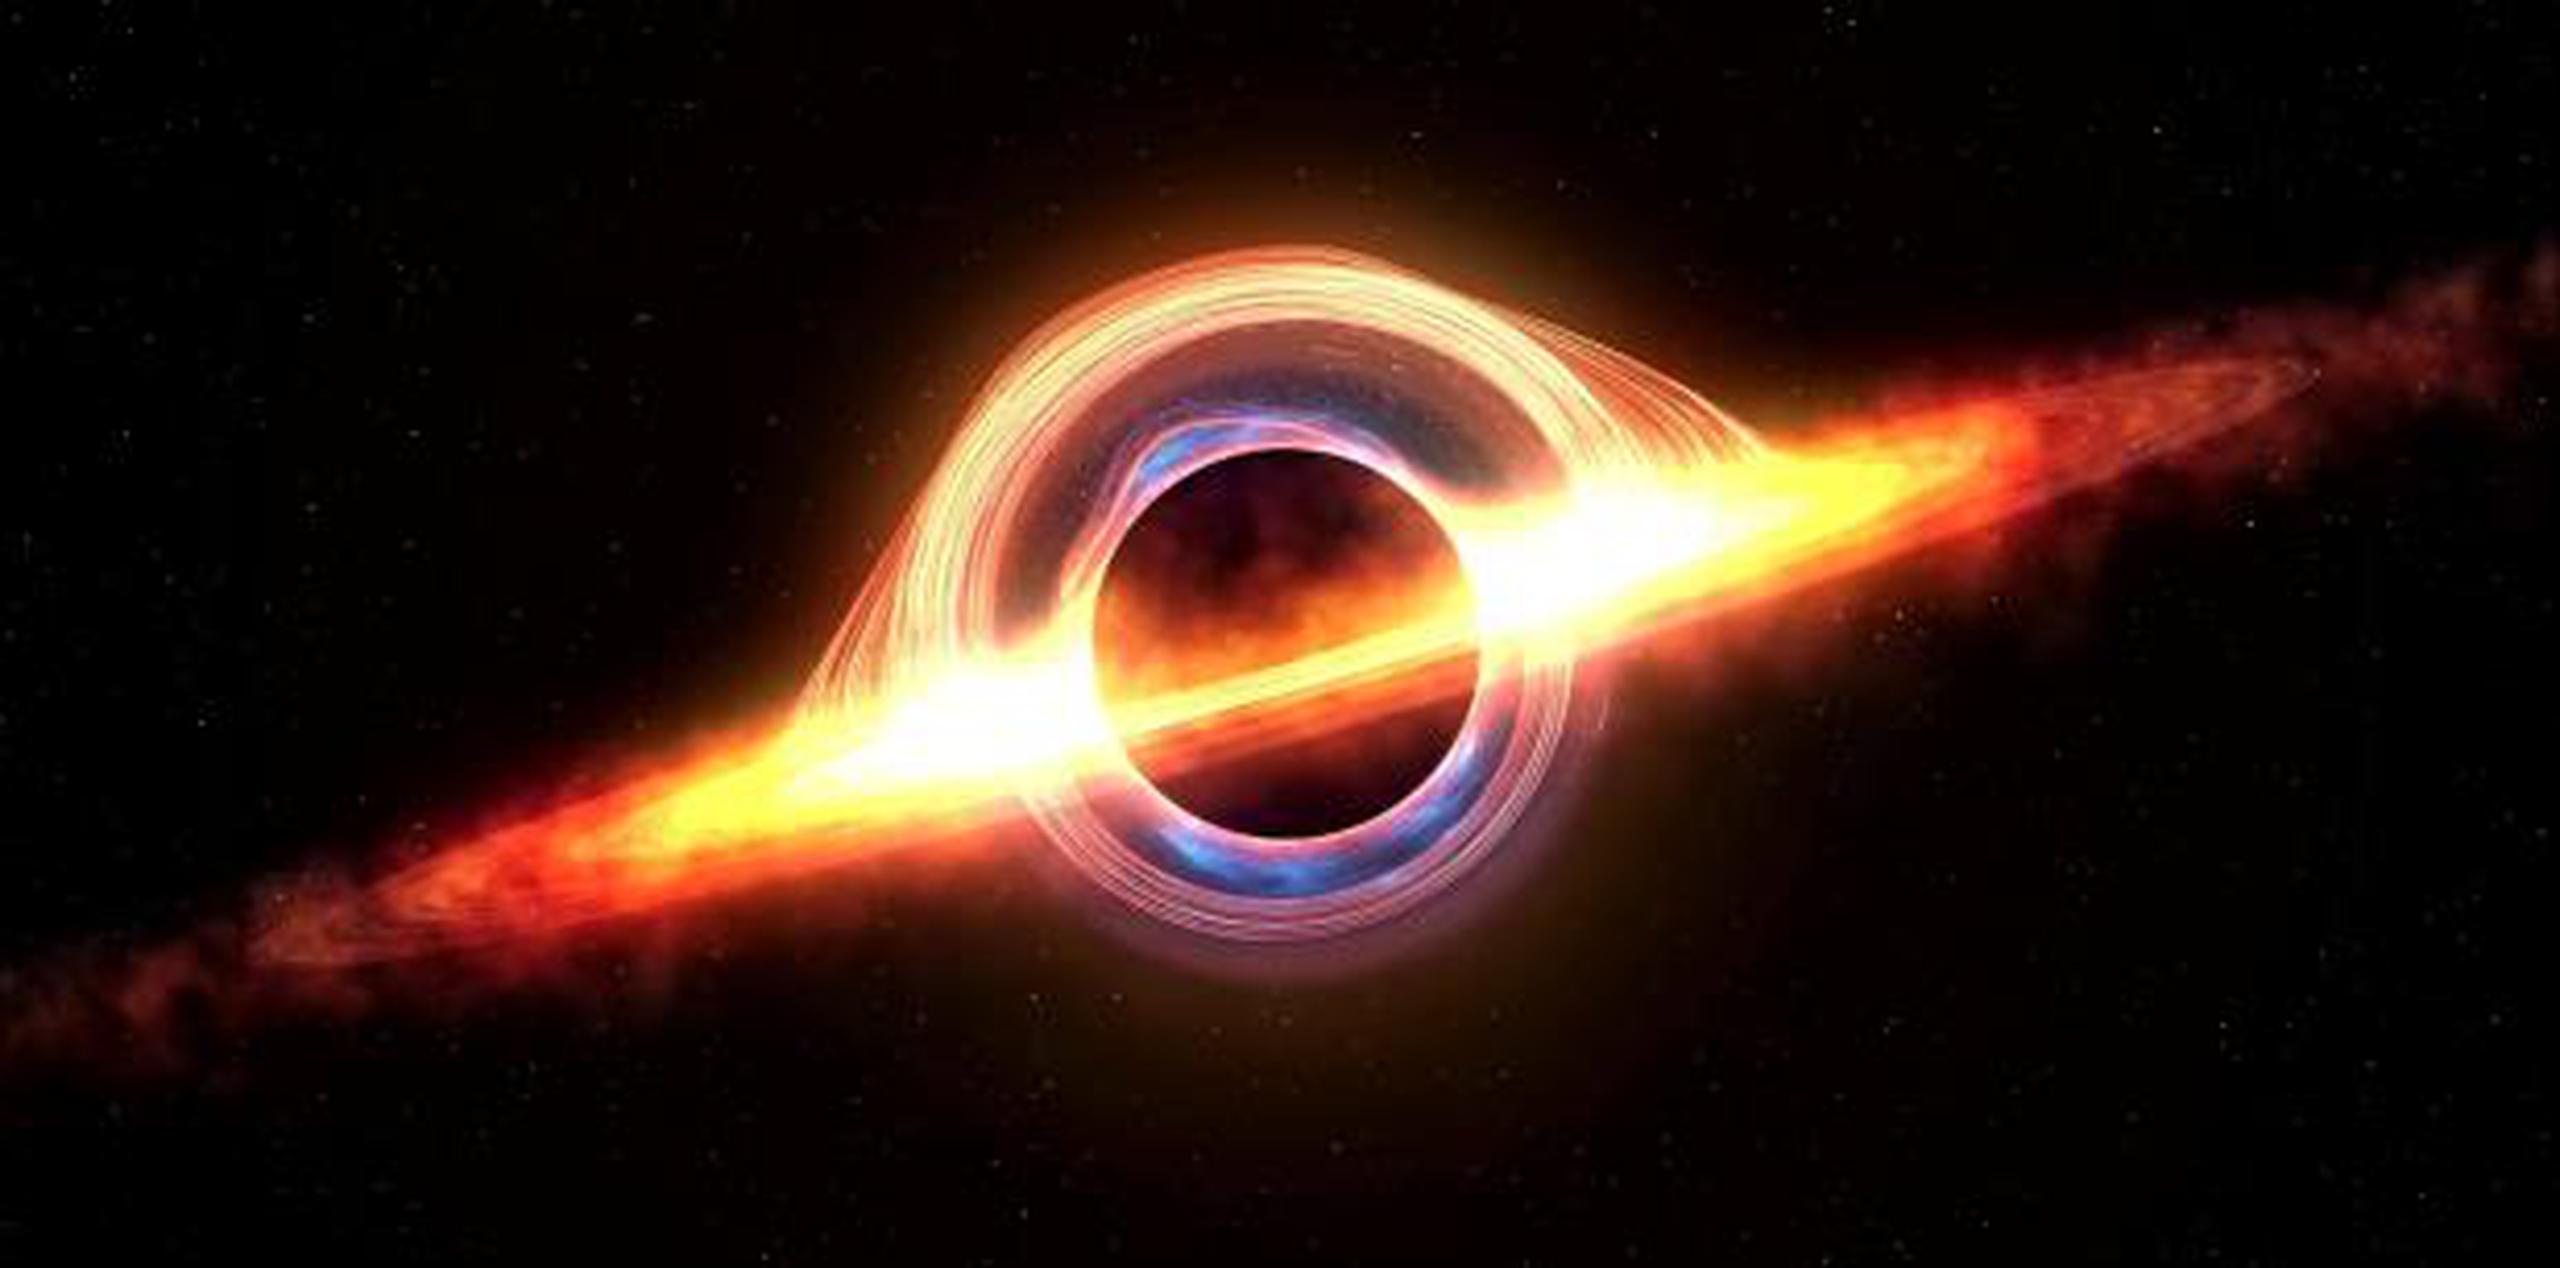 Ilustración de un agujero negro atrayendo materia espacial. (Shutterstock)